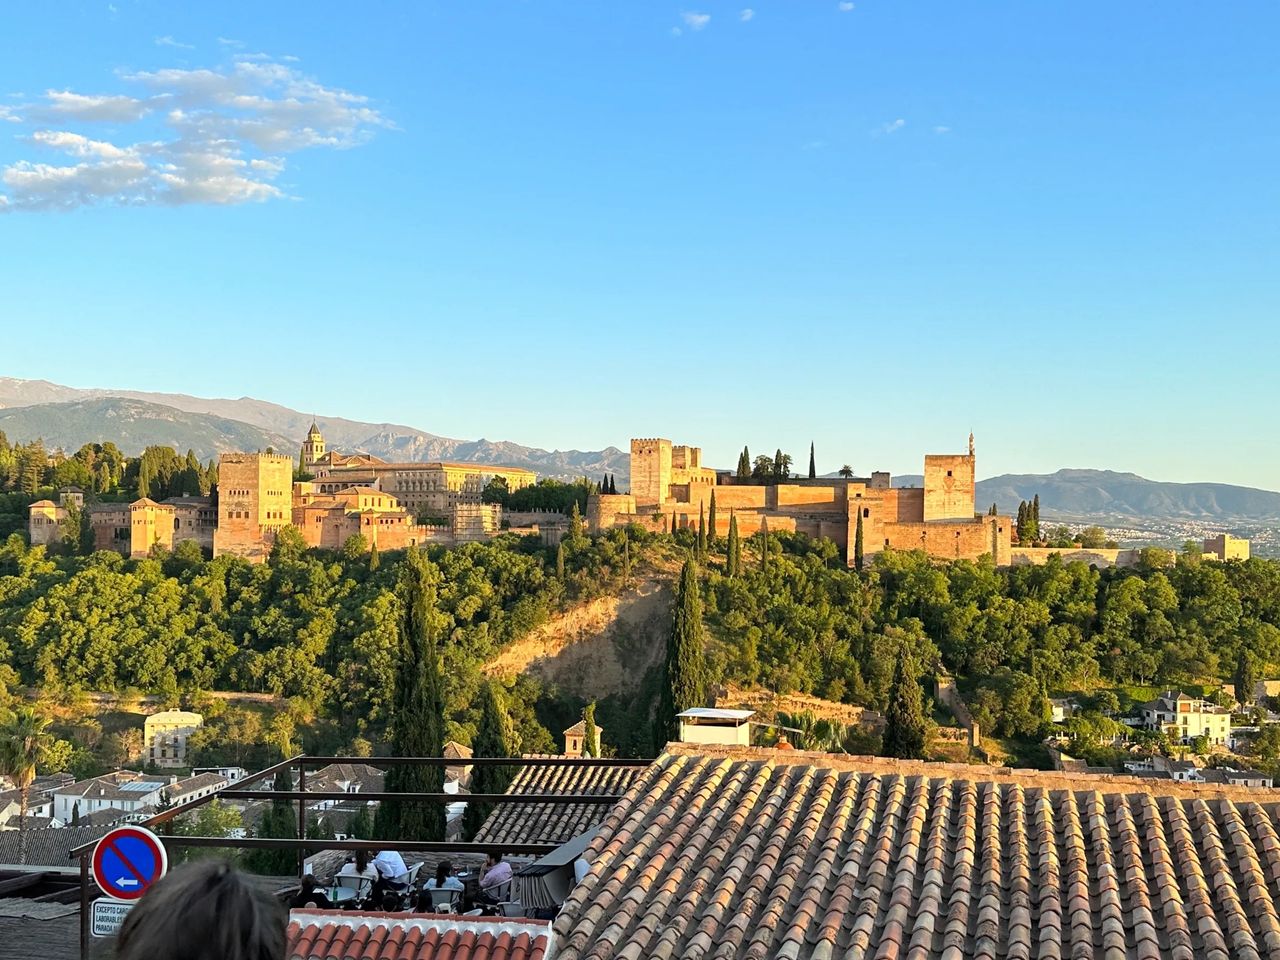 La Alhambra at sunset